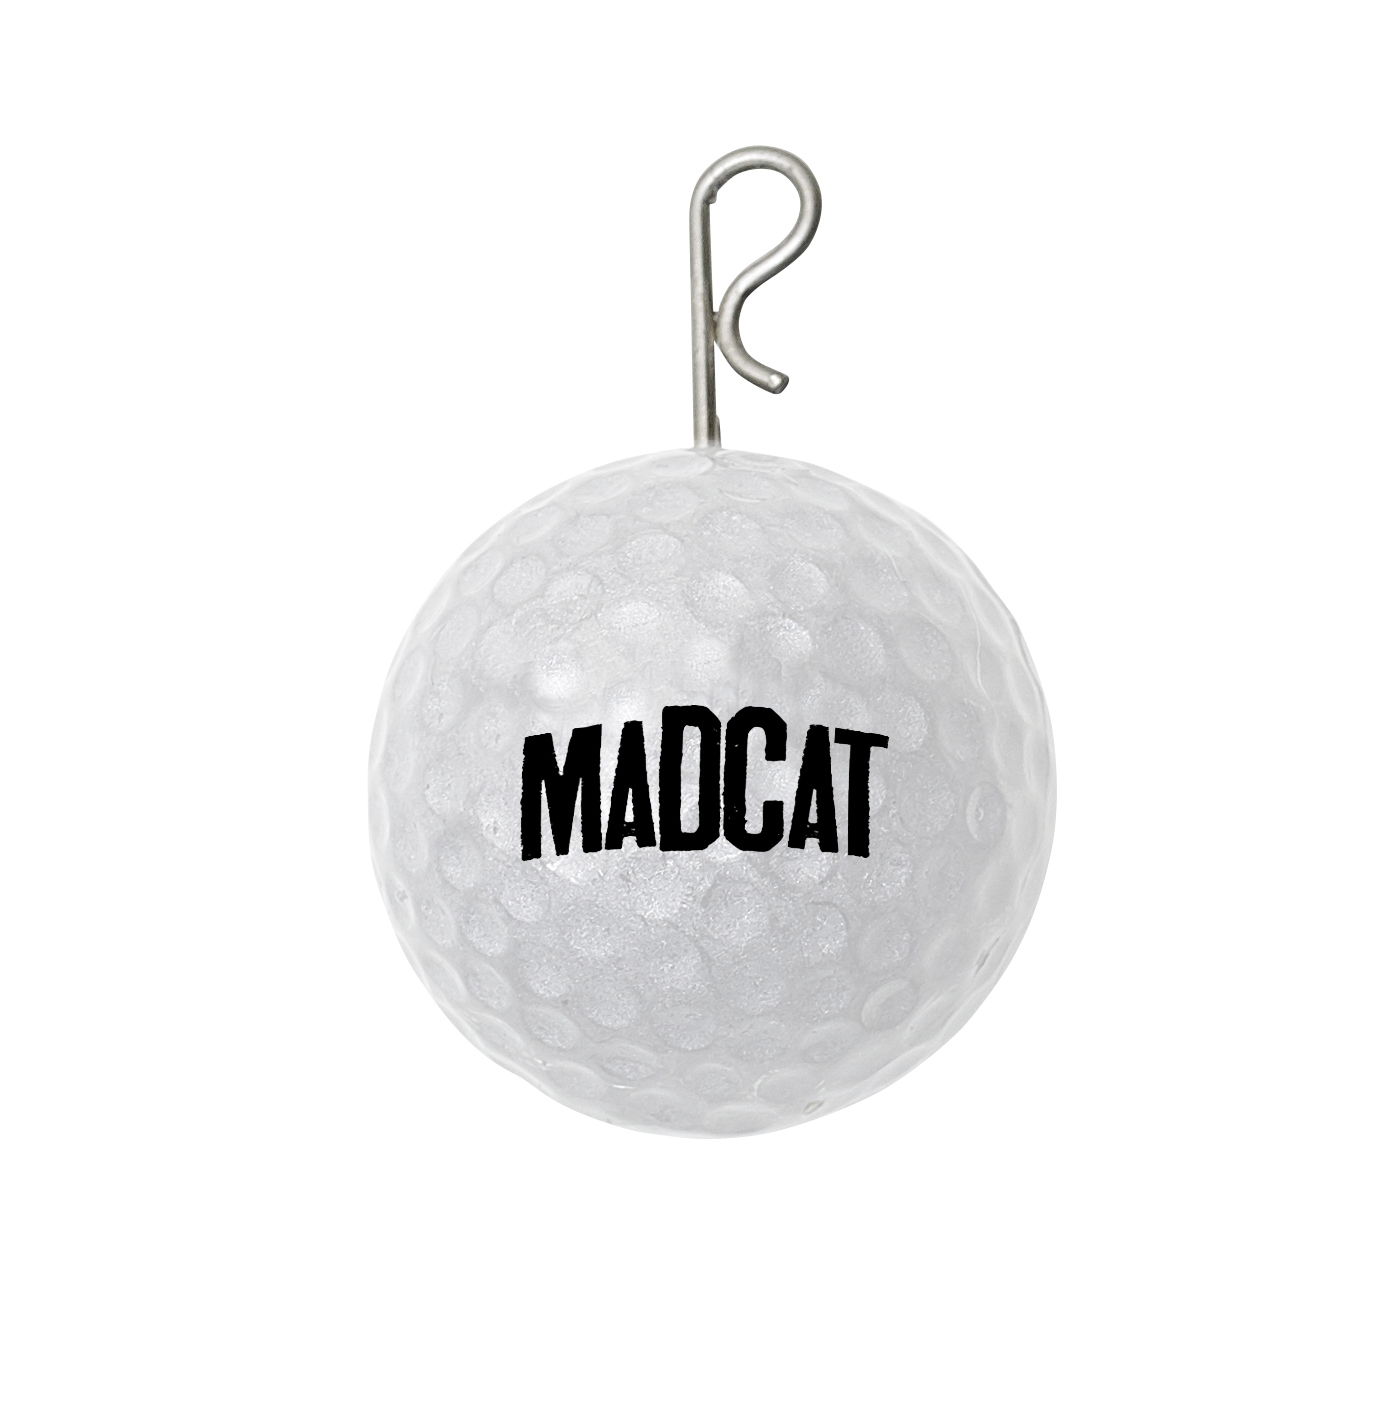 Madcat Golf Ball Snap-On Wels Vertiball